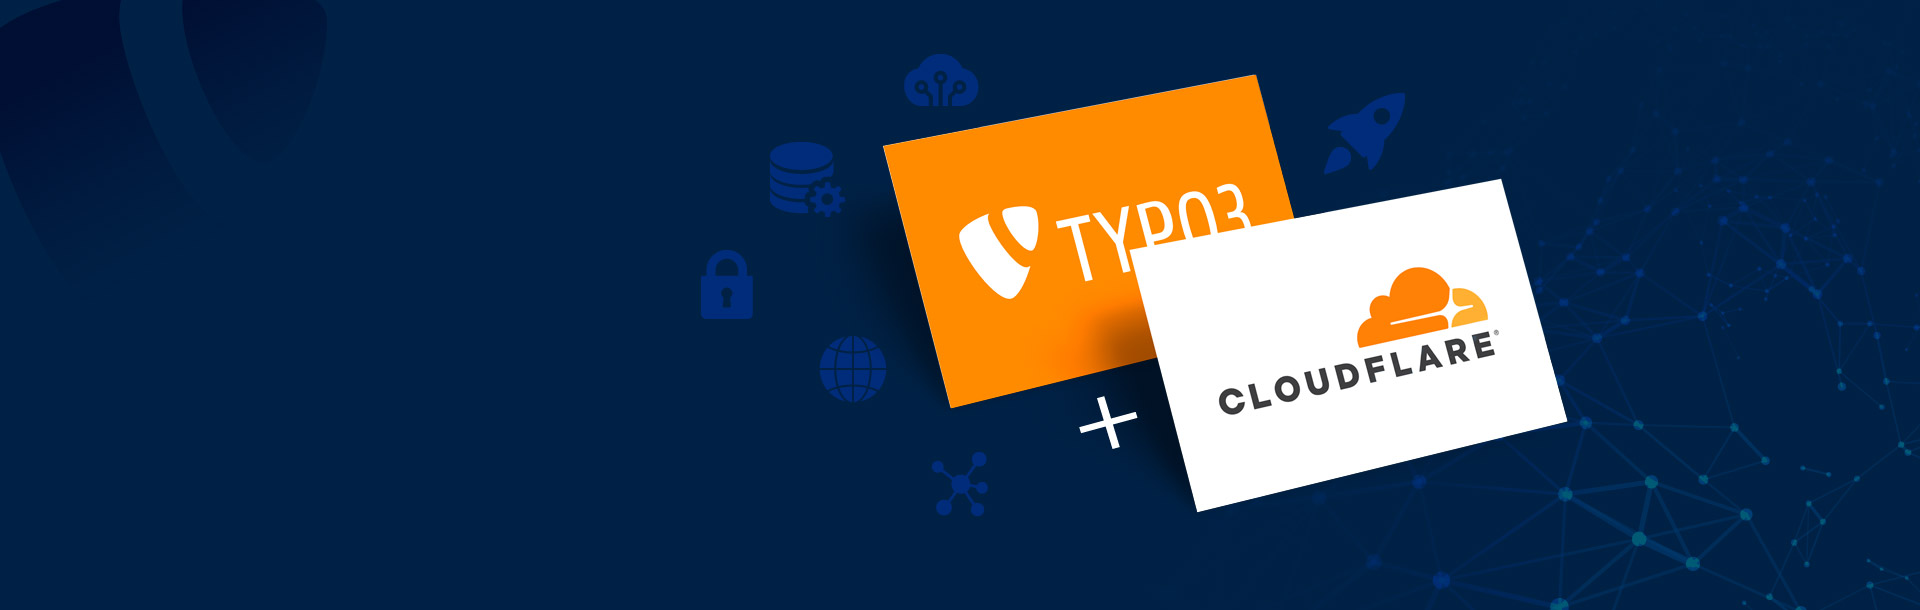 How to Setup Free TYPO3 Cloudflare?